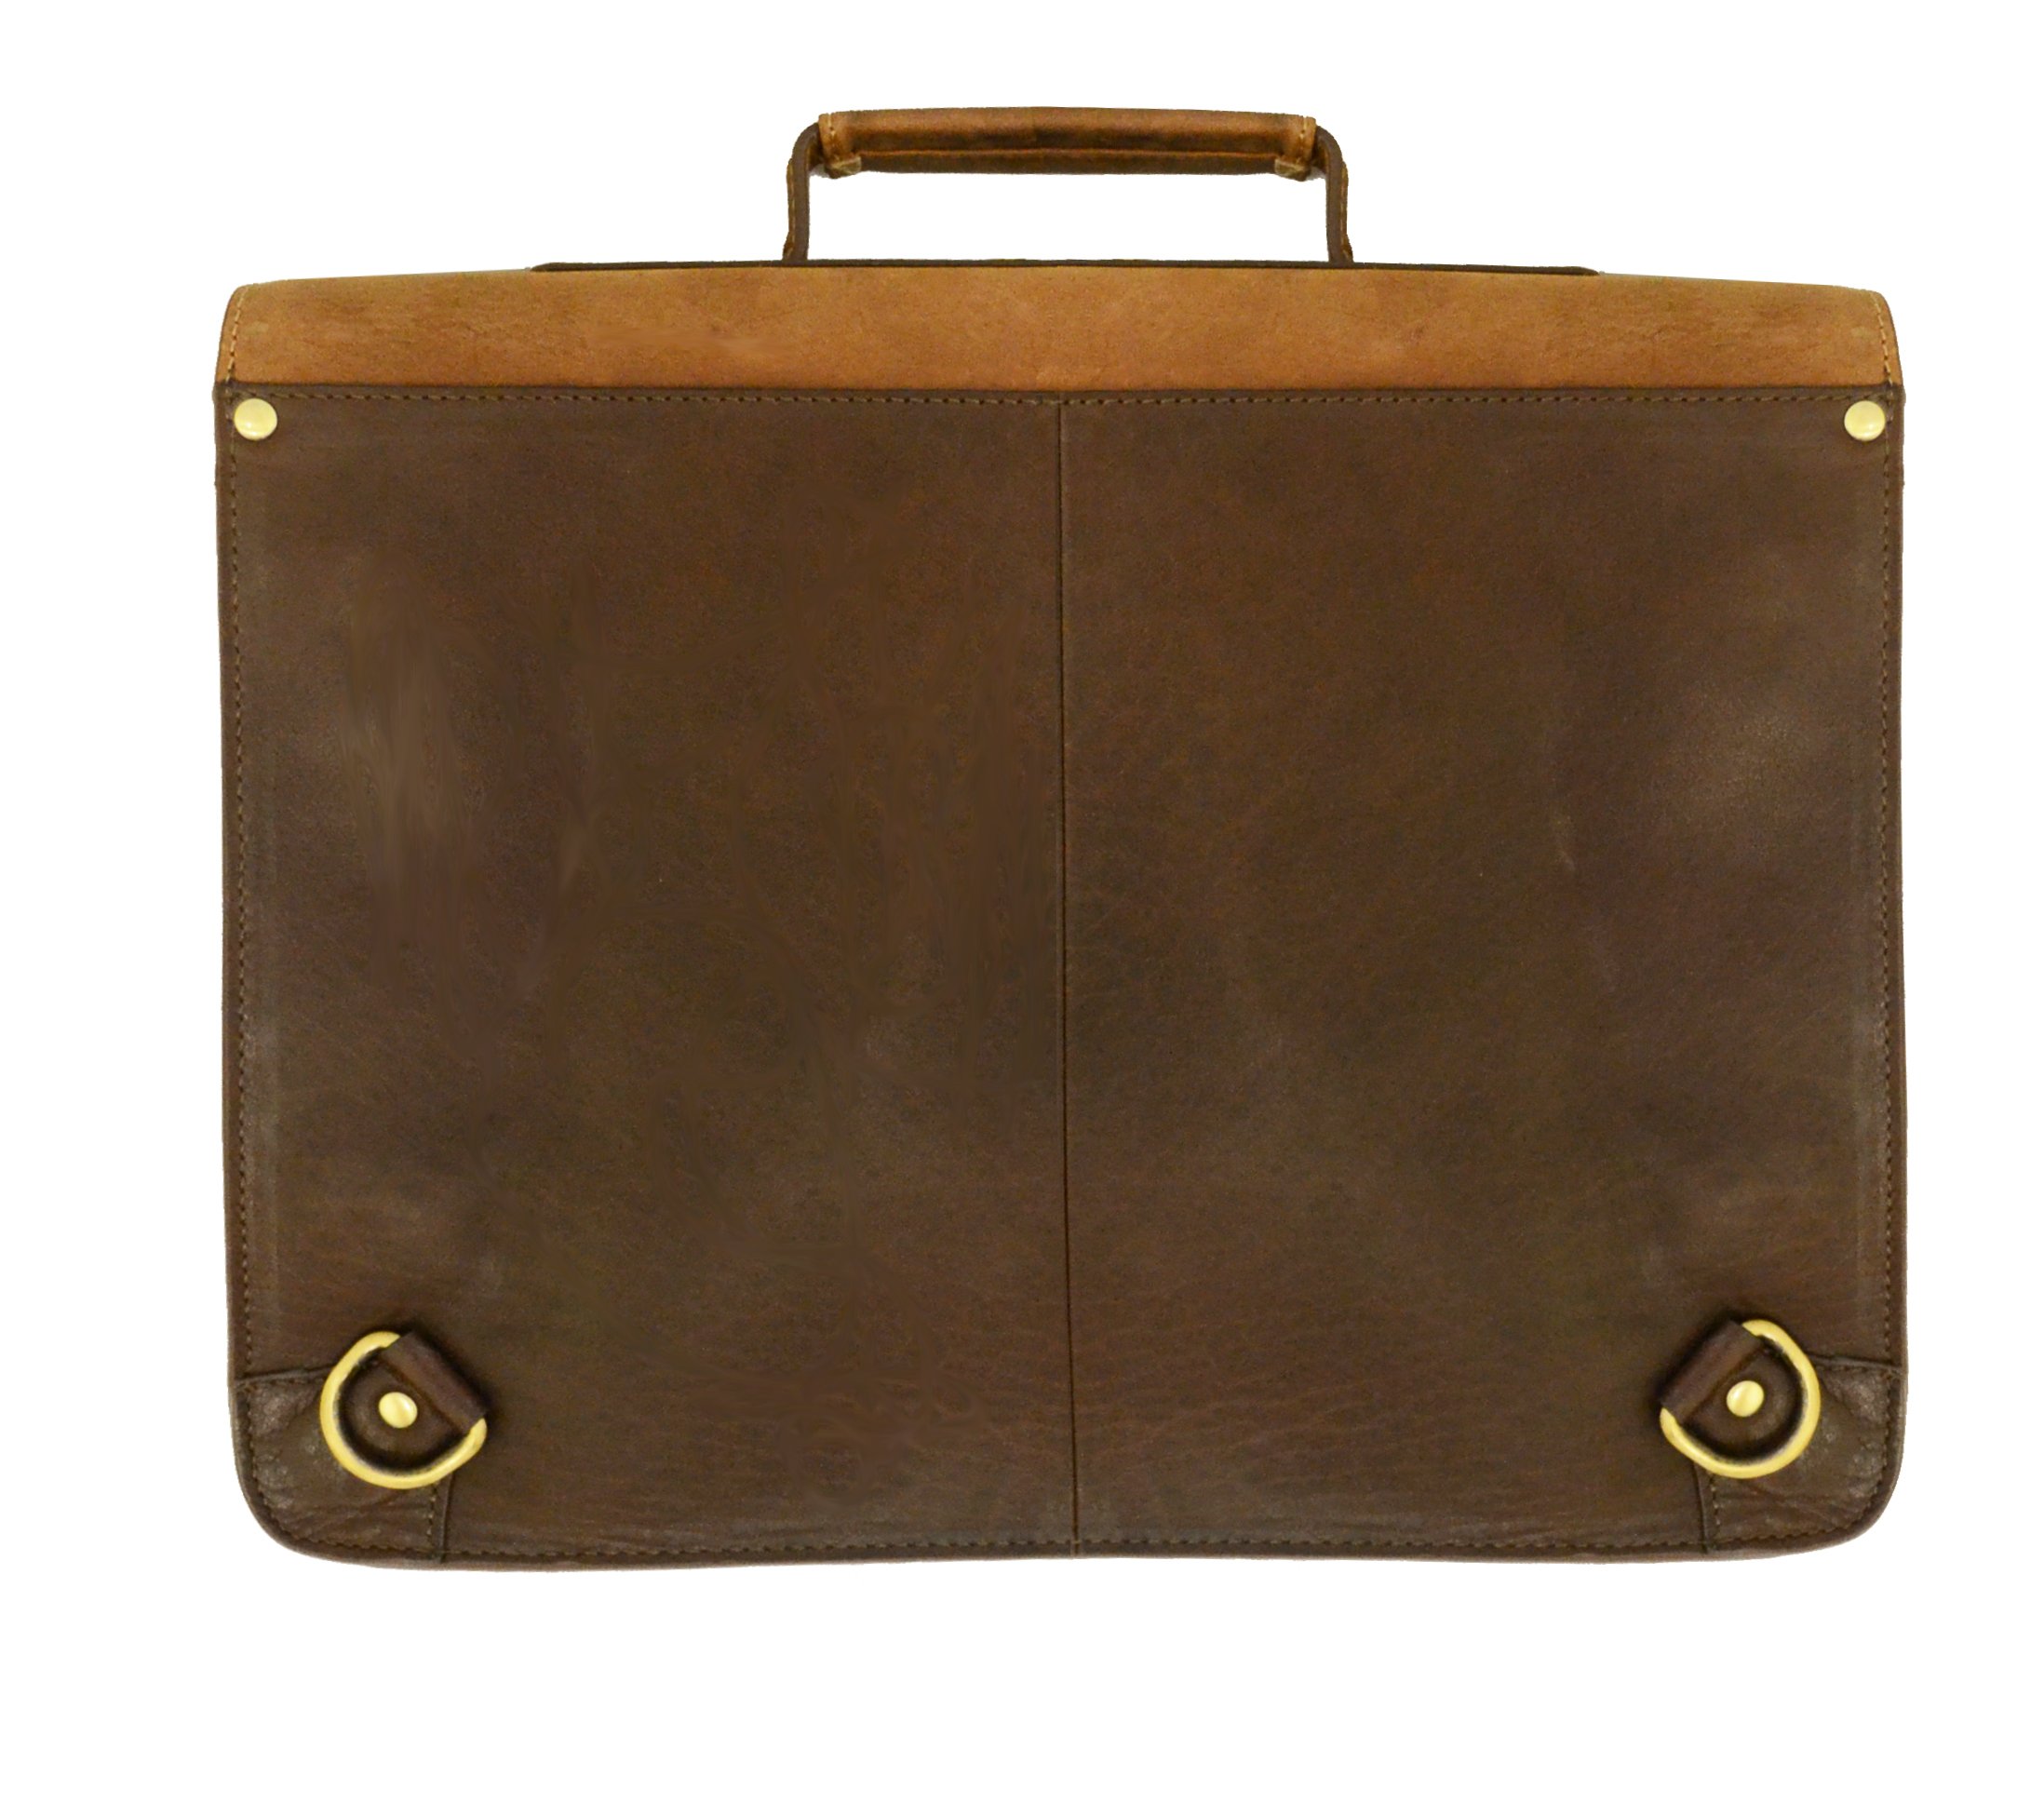 Visconti 16106 Flapover Briefcase, Tan, One Size